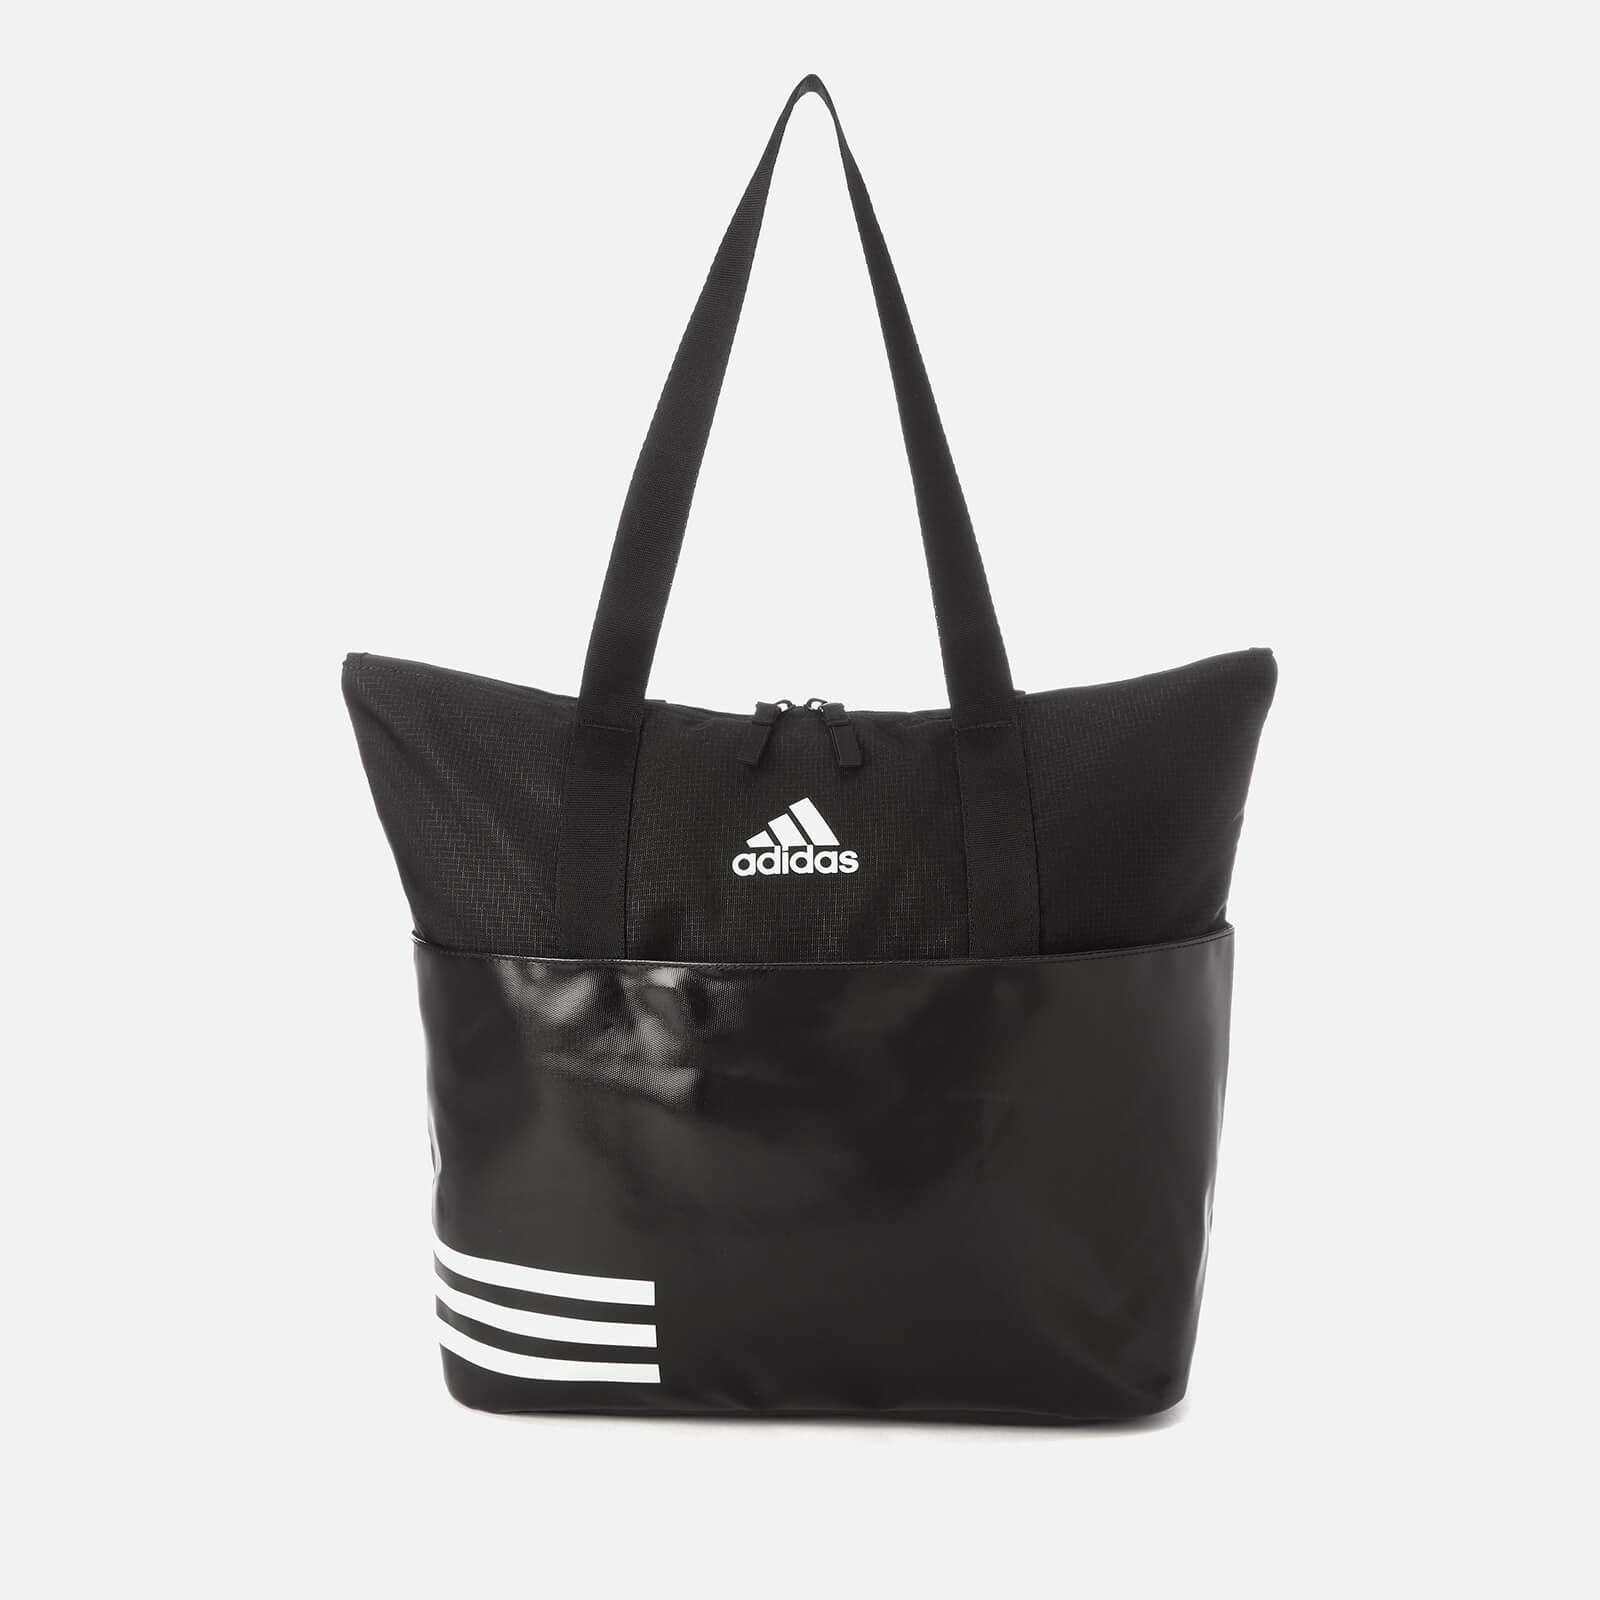 adidas 3 Stripe Tote Bag in Black - Lyst